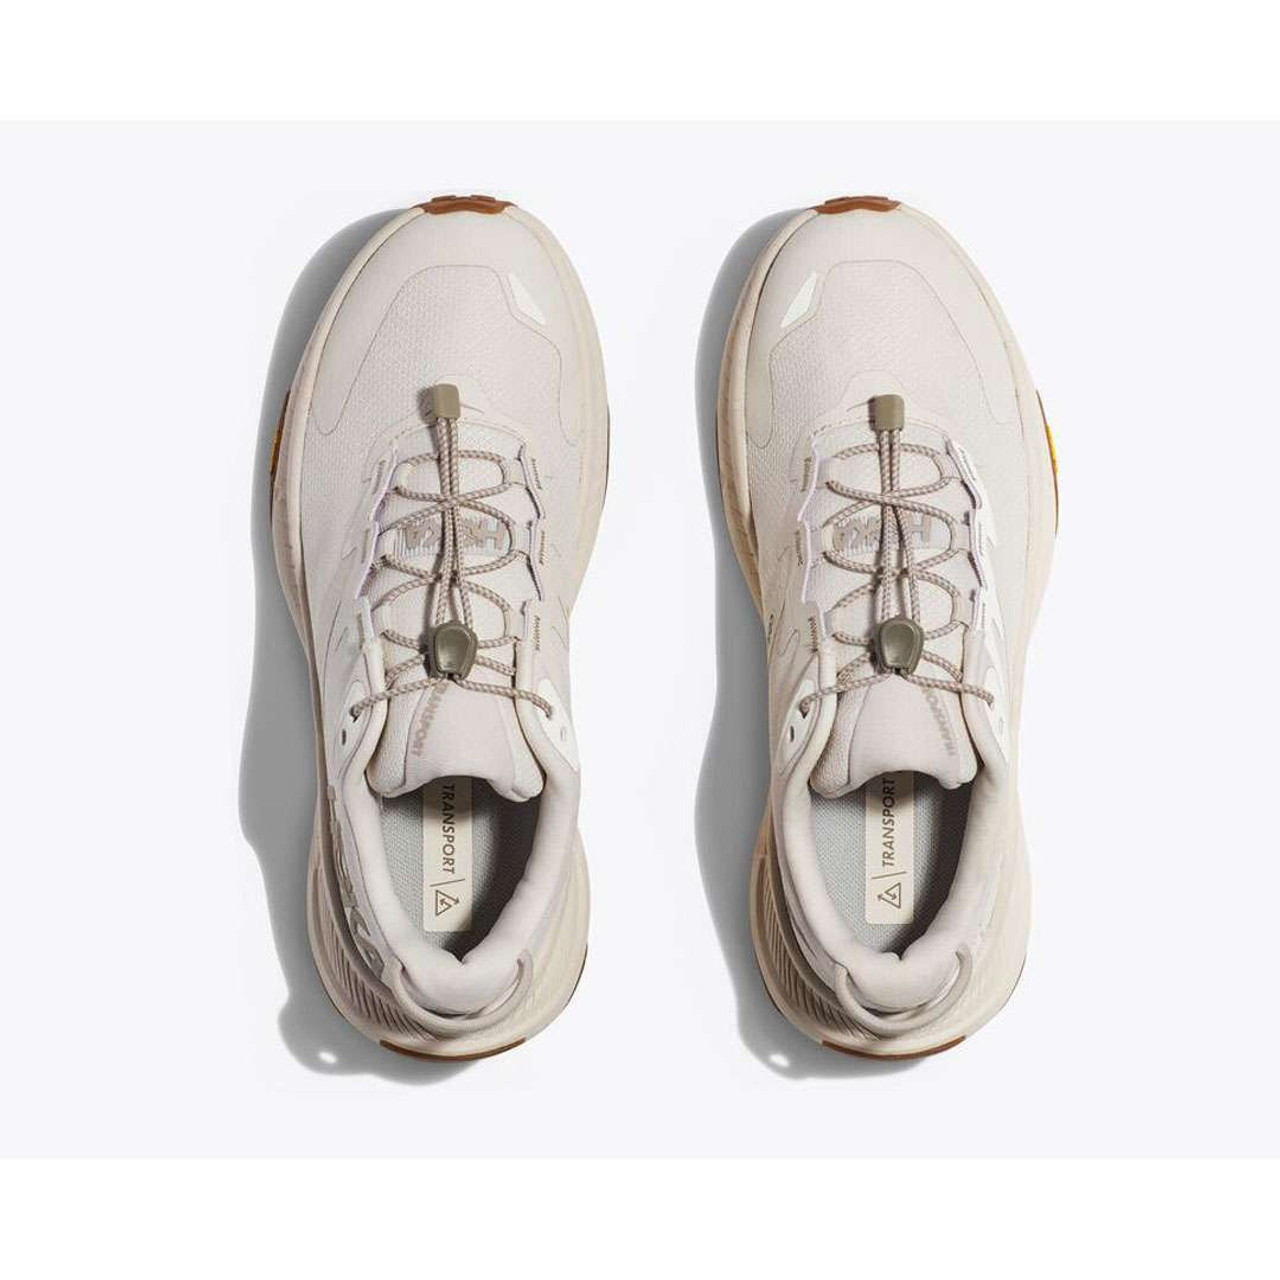 Hoka One One Hoka Women's Transport Commuter Shoes $ 139.99 | TYLER'S